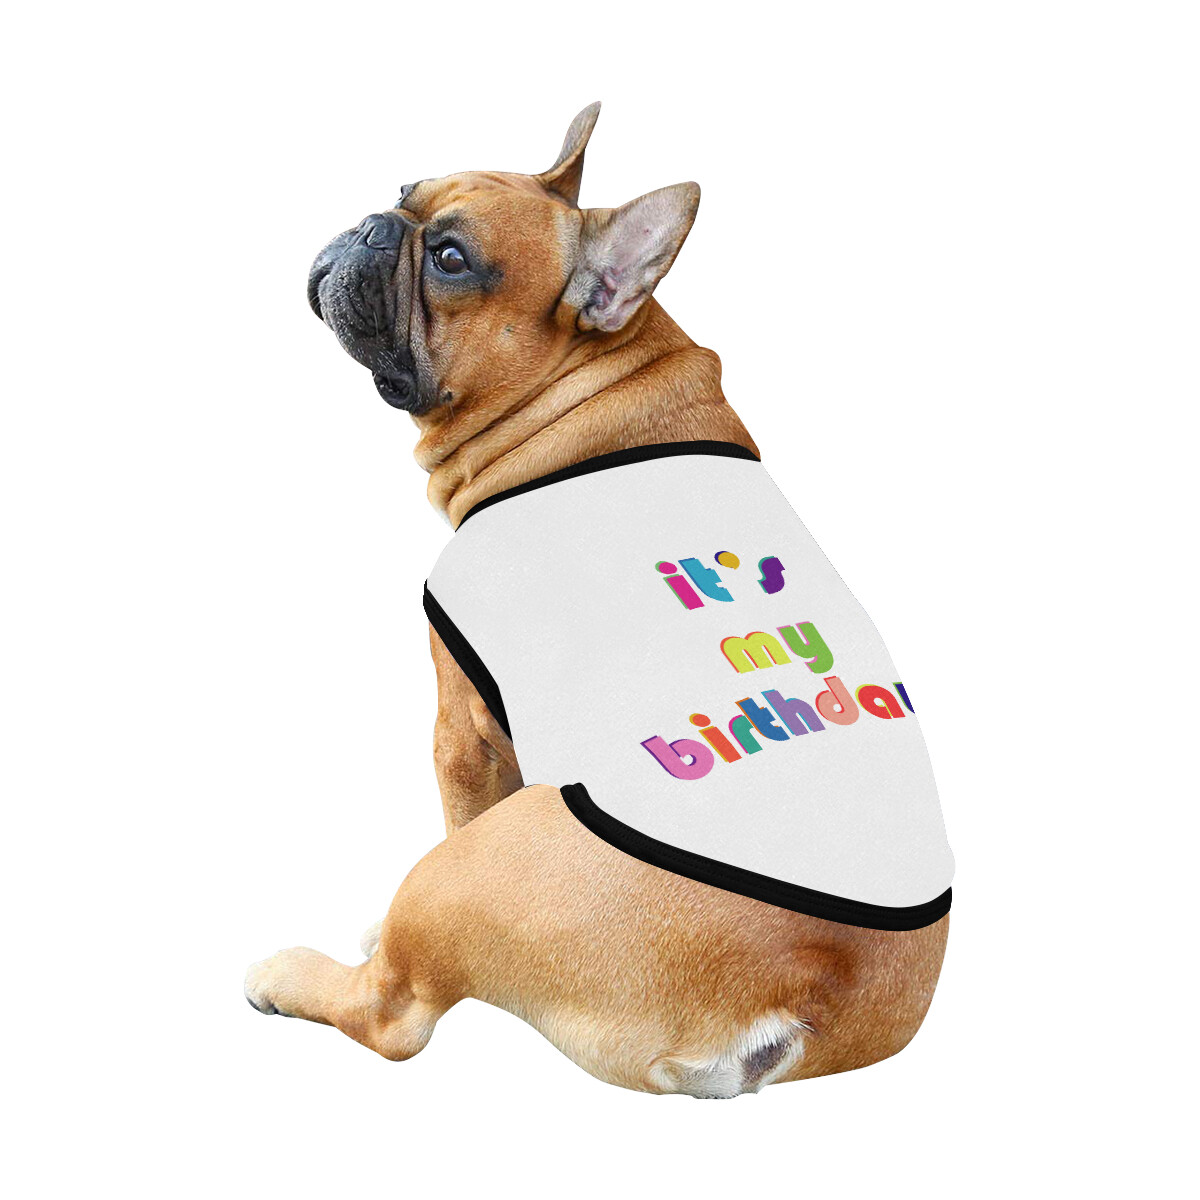 🐕🎂It's my Birthday dog t-shirt, Dog Tank Top, Dog shirt, Dog clothes, Dog clothing, Dog apparel, Gift for dogs, Birthday gift